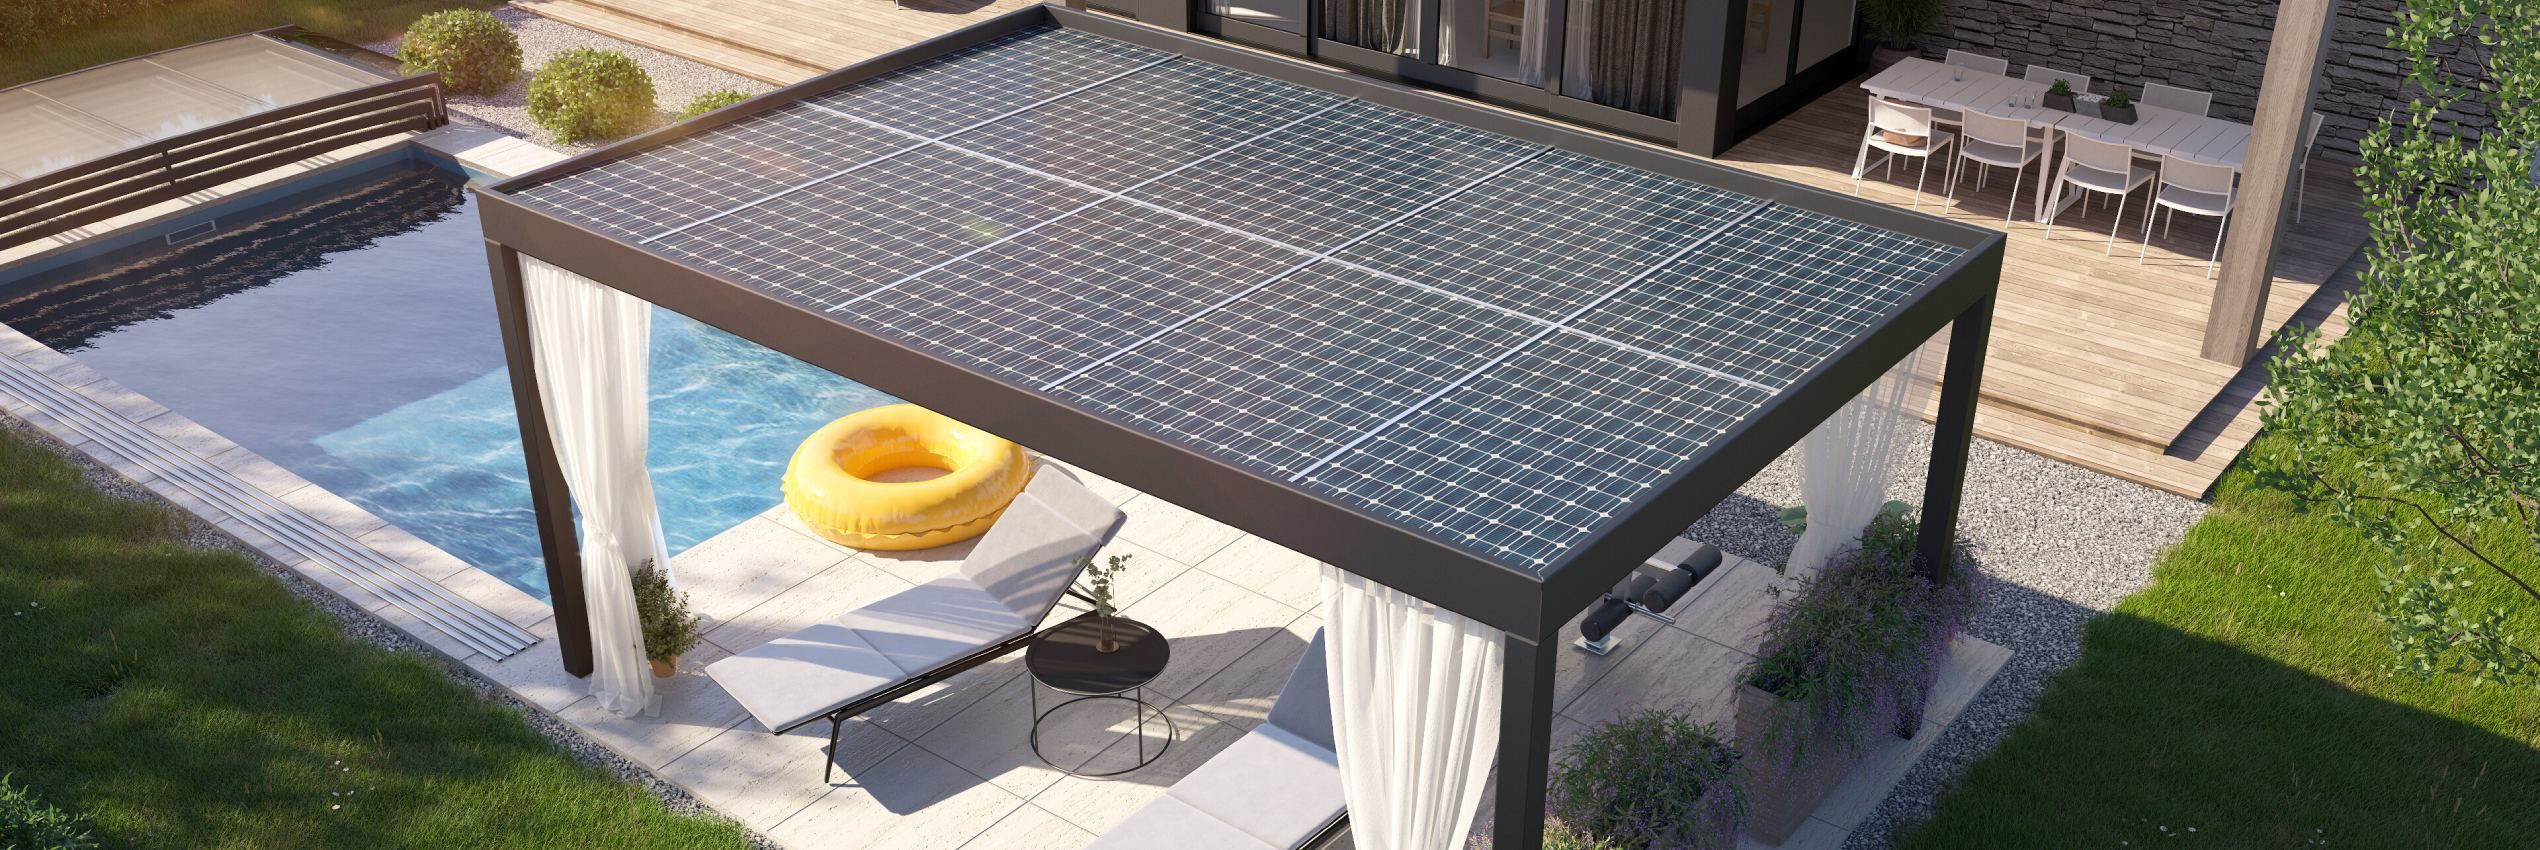 Pergola Solar autonomous energy source for swimming pool